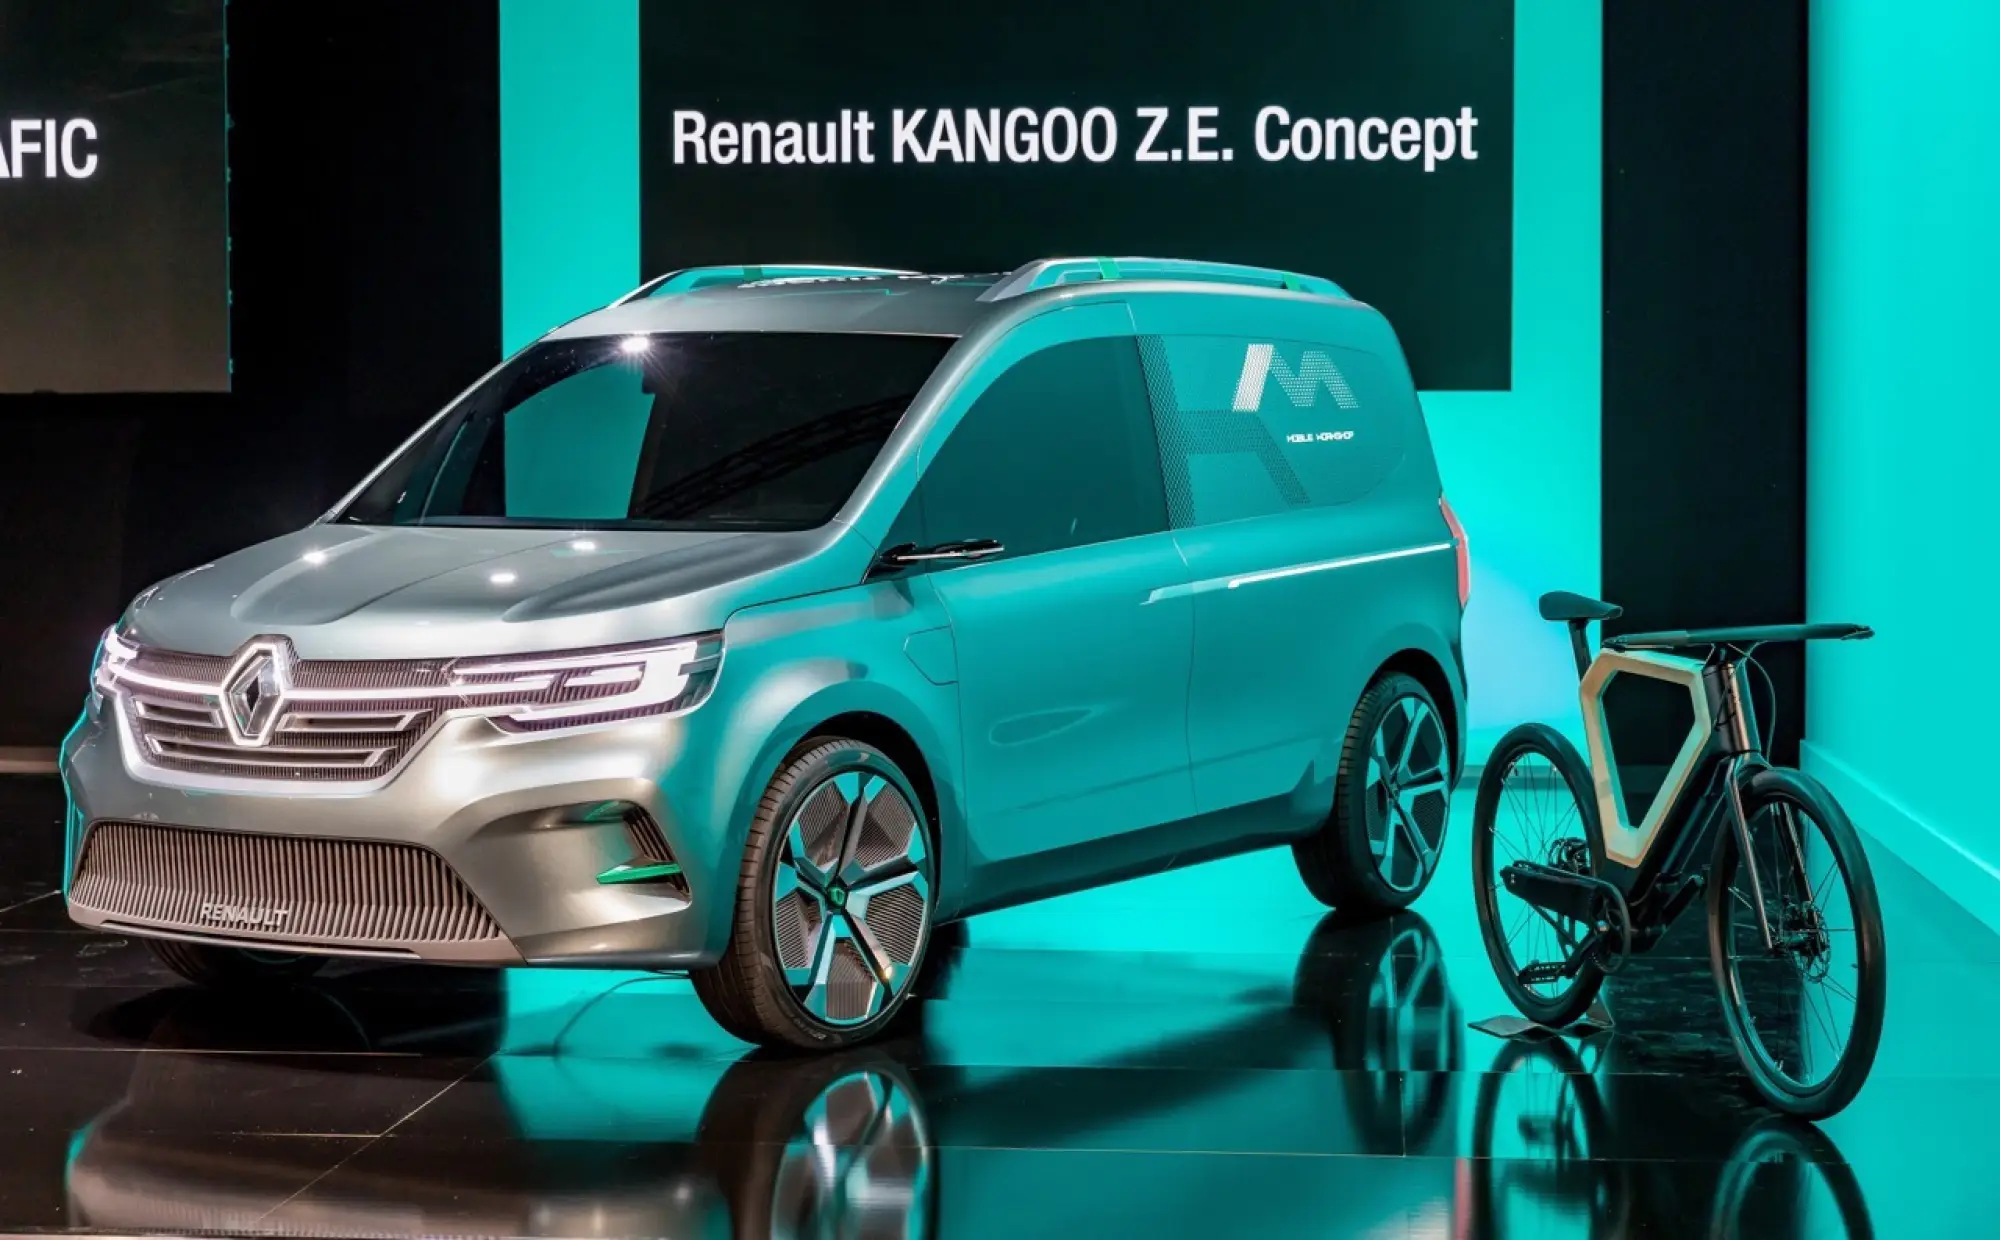 Renault veicoli commerciali - Aprile 2019 - 21